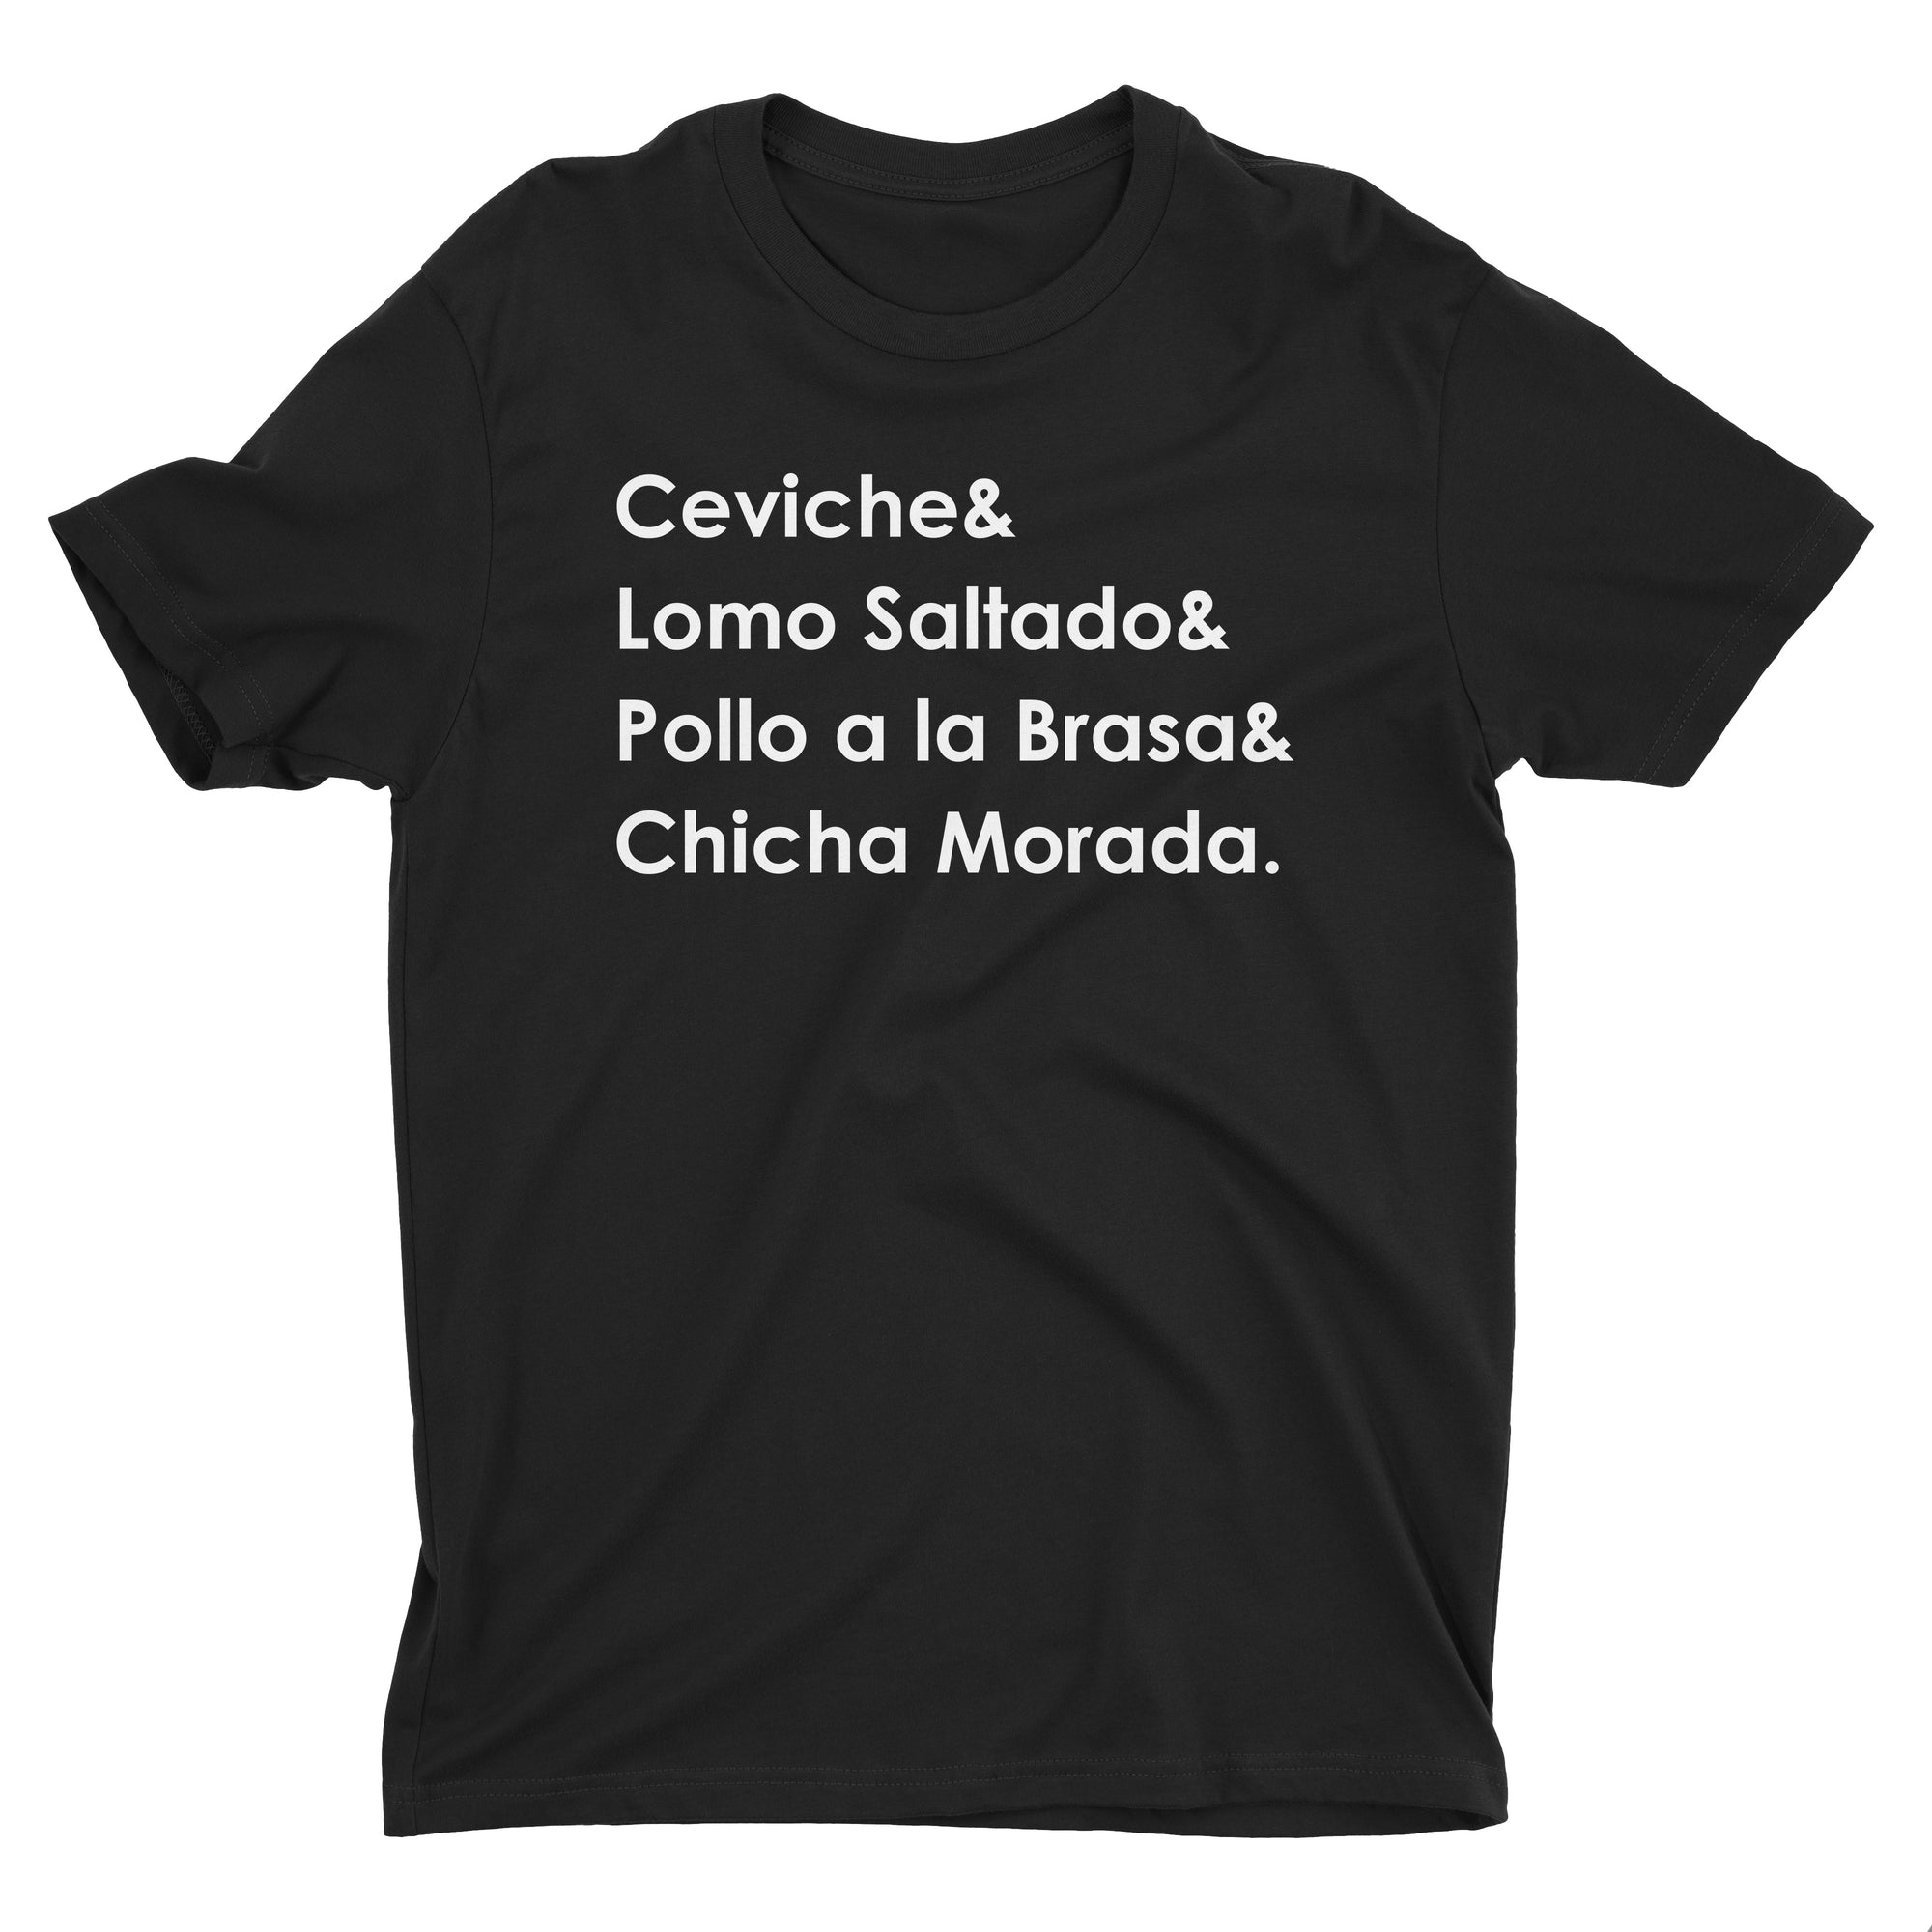 Peruvian Food Black T-Shirt - Ceviche, Lomo Saltado, Pollo a la Brasa, Chicha Morada